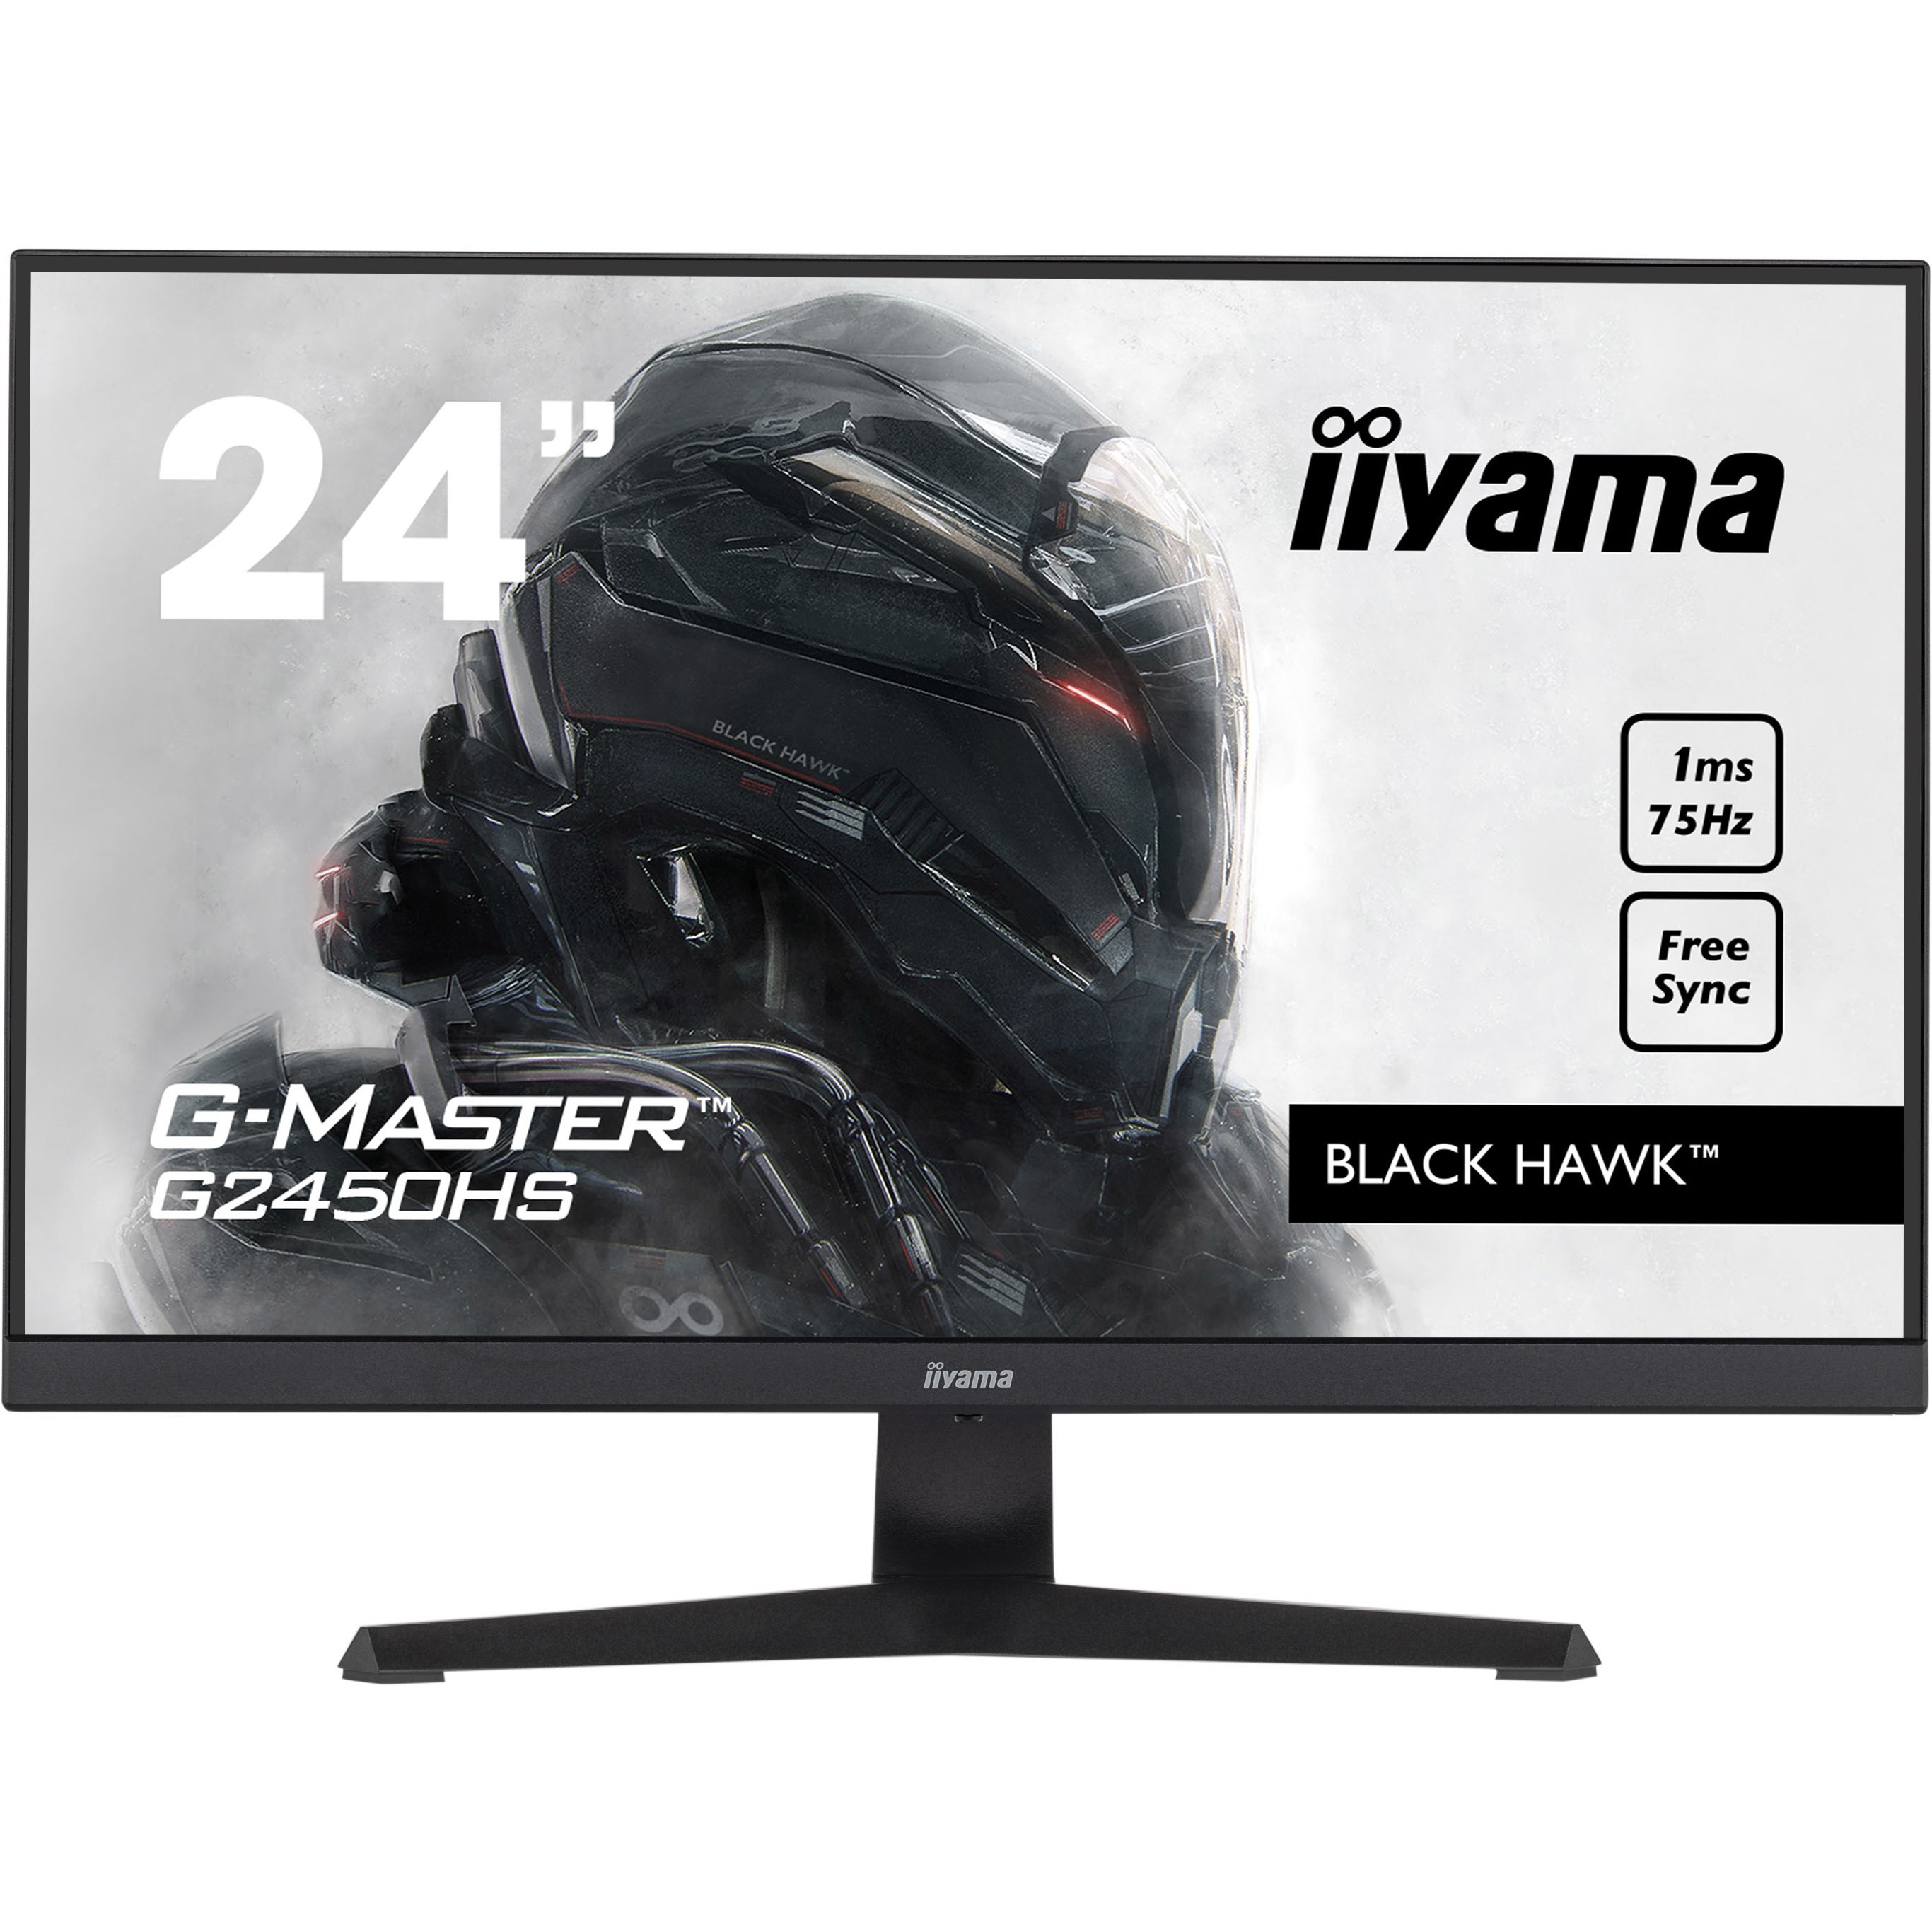 iiyama G-MASTER Black Hawk G2450HS-B1 23.8inch Full HD LED LCD Monitor -  16:9 - Matte, Black - G2450HS-B1